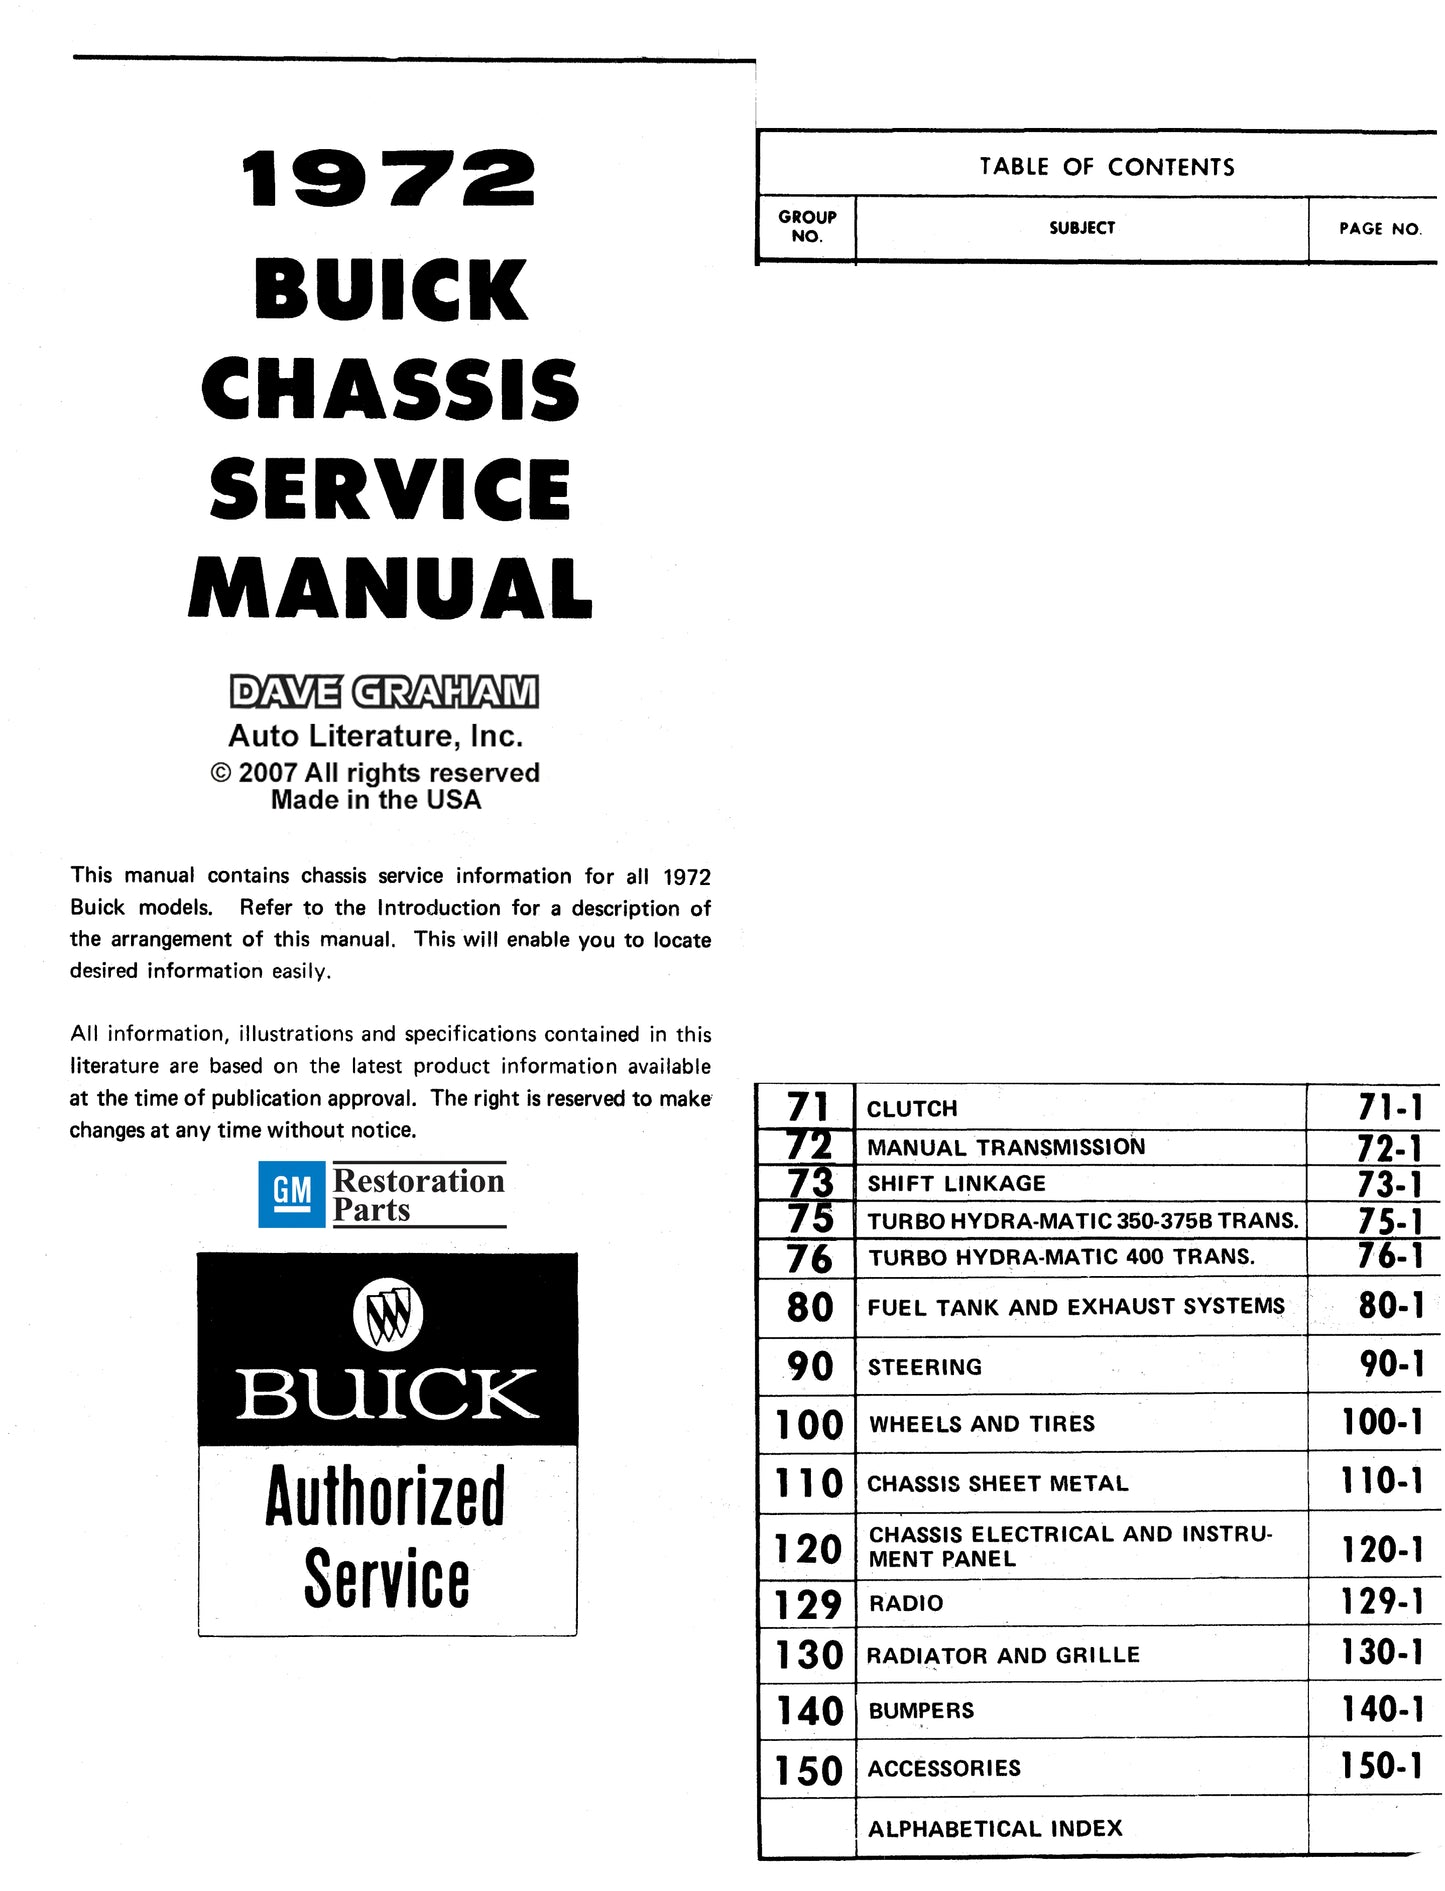 1972 Buick Repair Manual & Body Manual- All Models